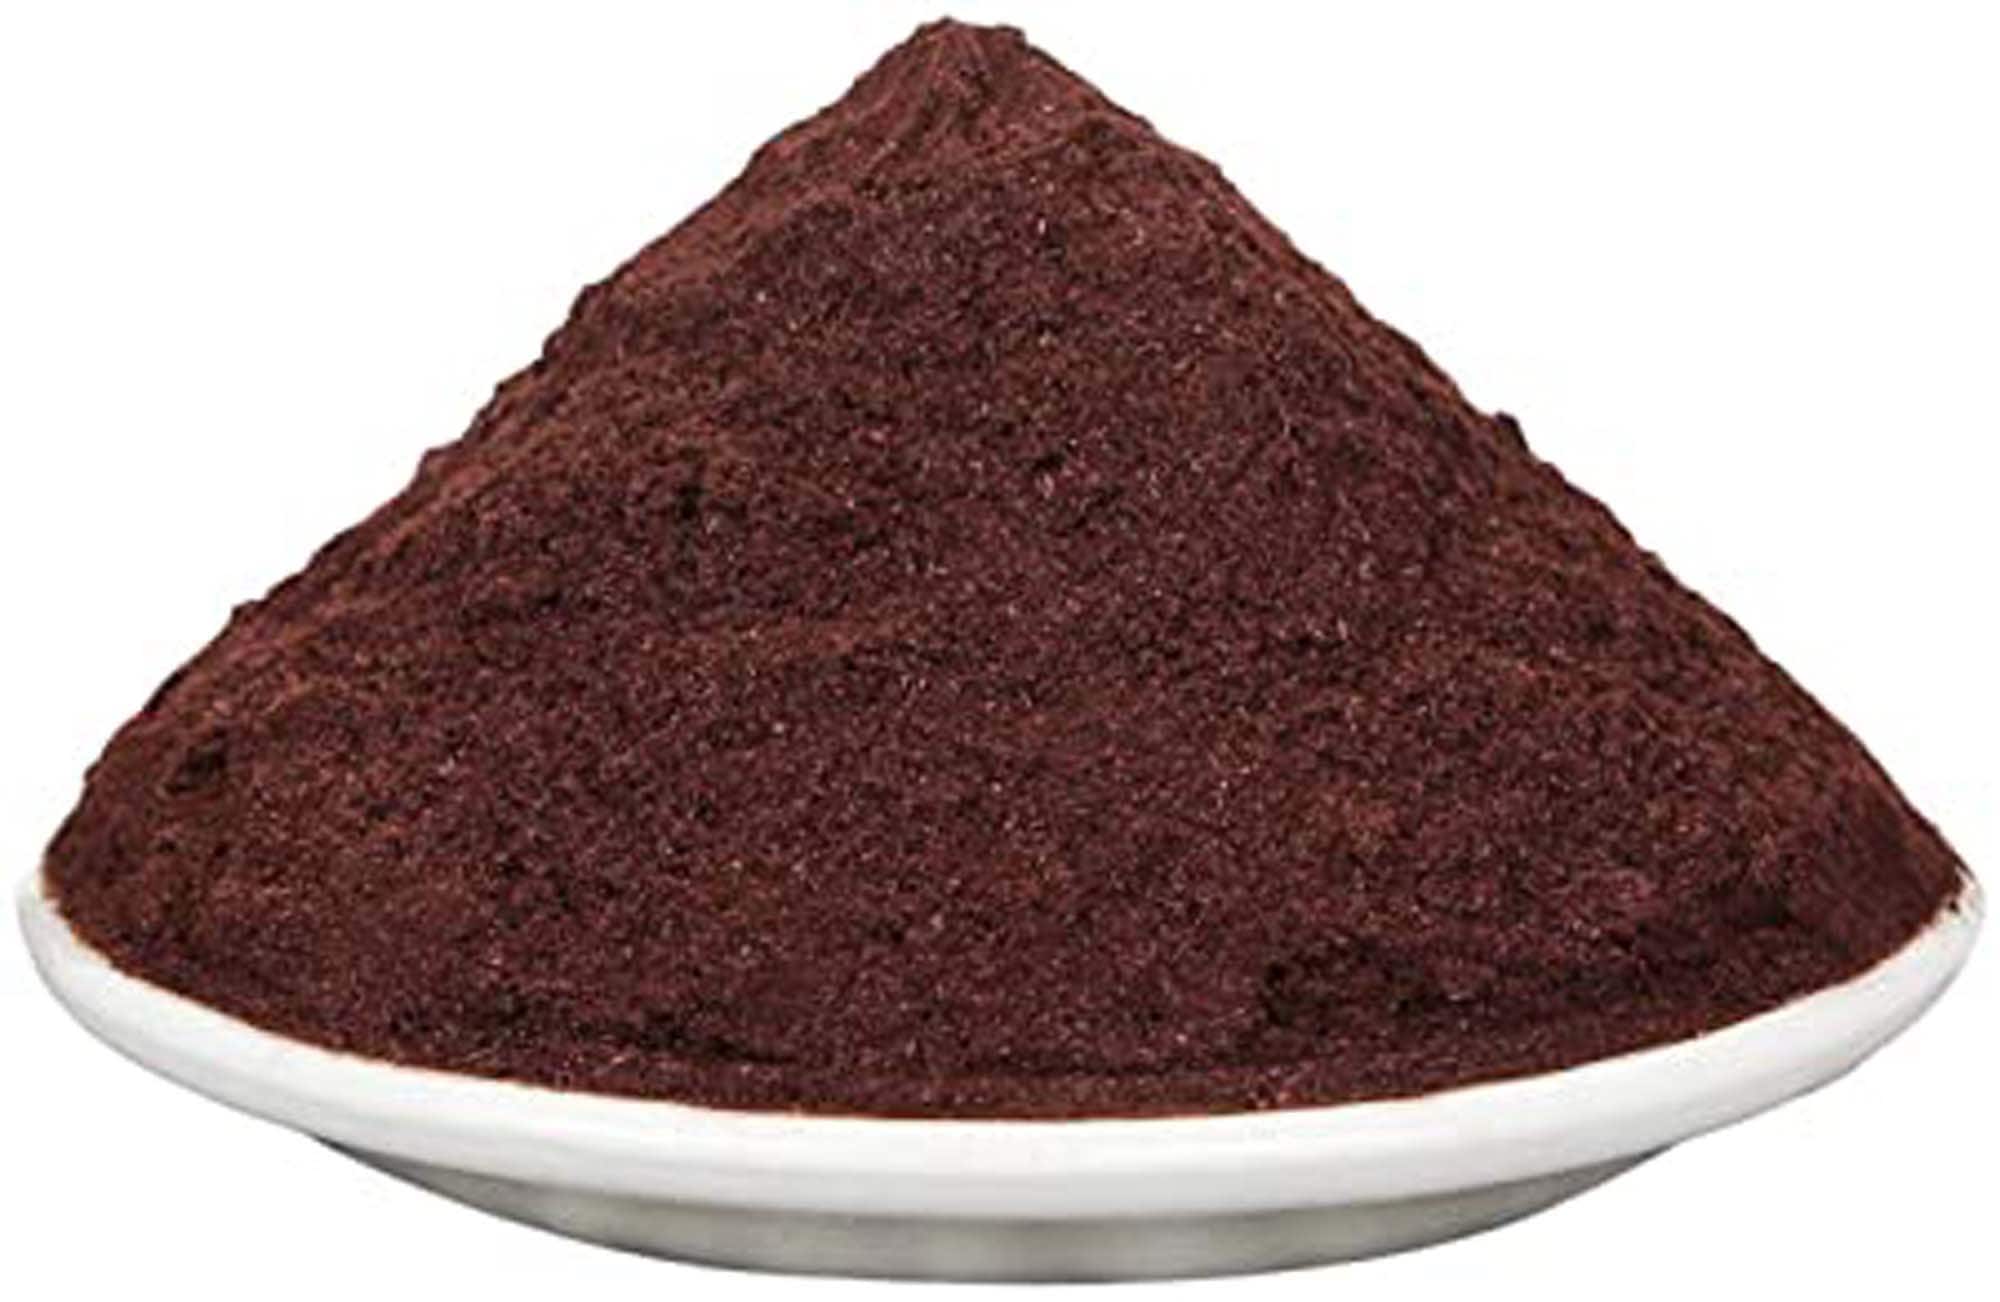 Ratanjot Root Powder -रतनजोत जड्ड का चूर्ण-Jatropha Curcas Raw Herbs